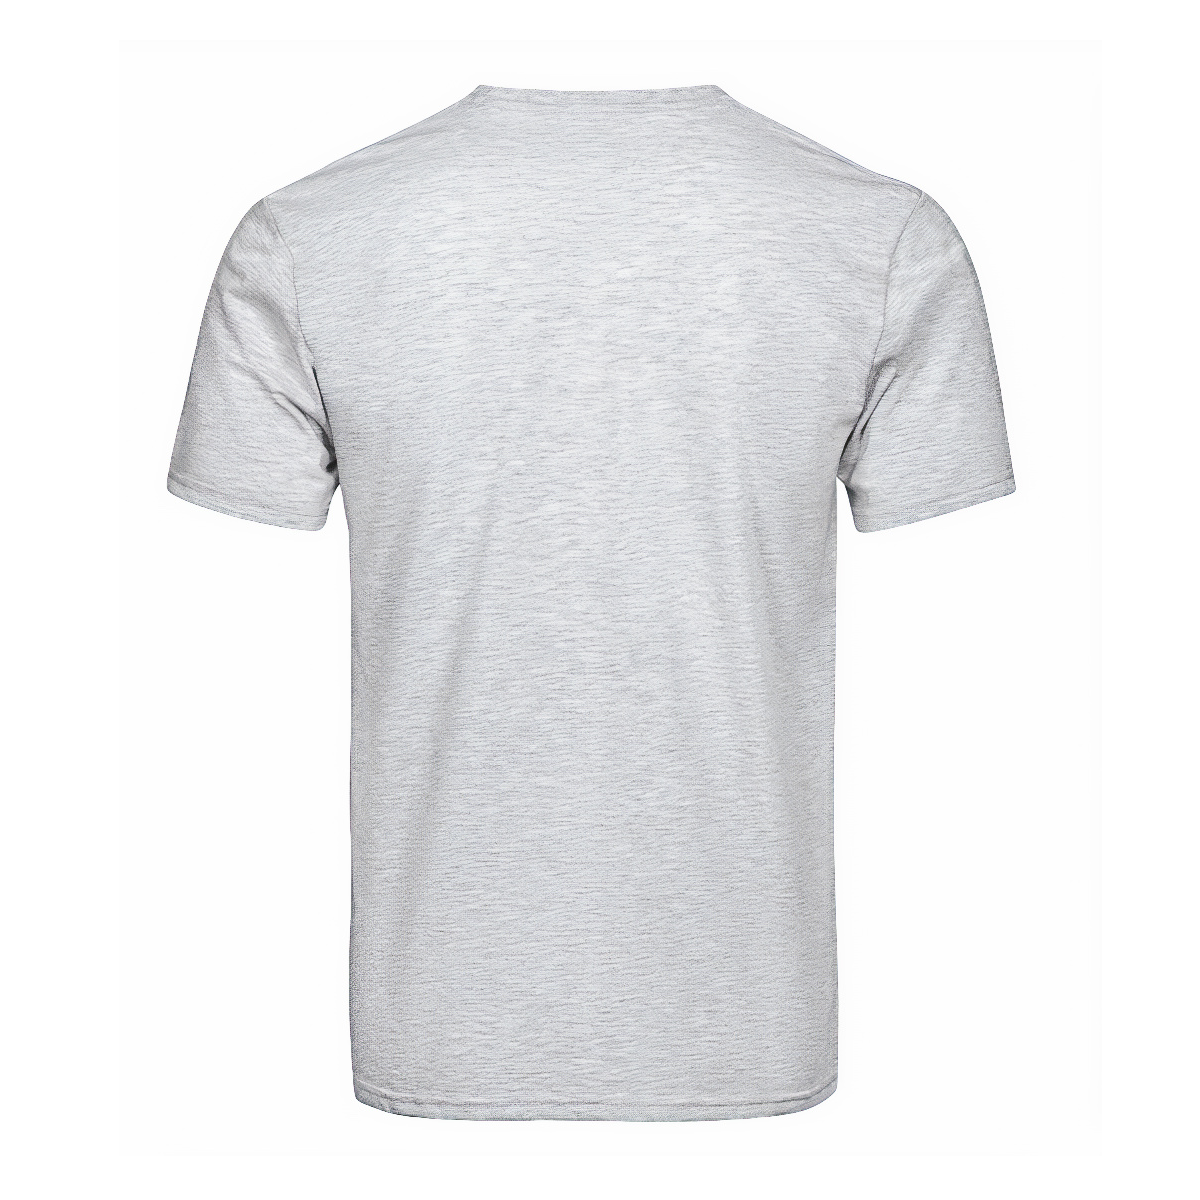 Calder Tartan Crest T-shirt - I'm not yelling style